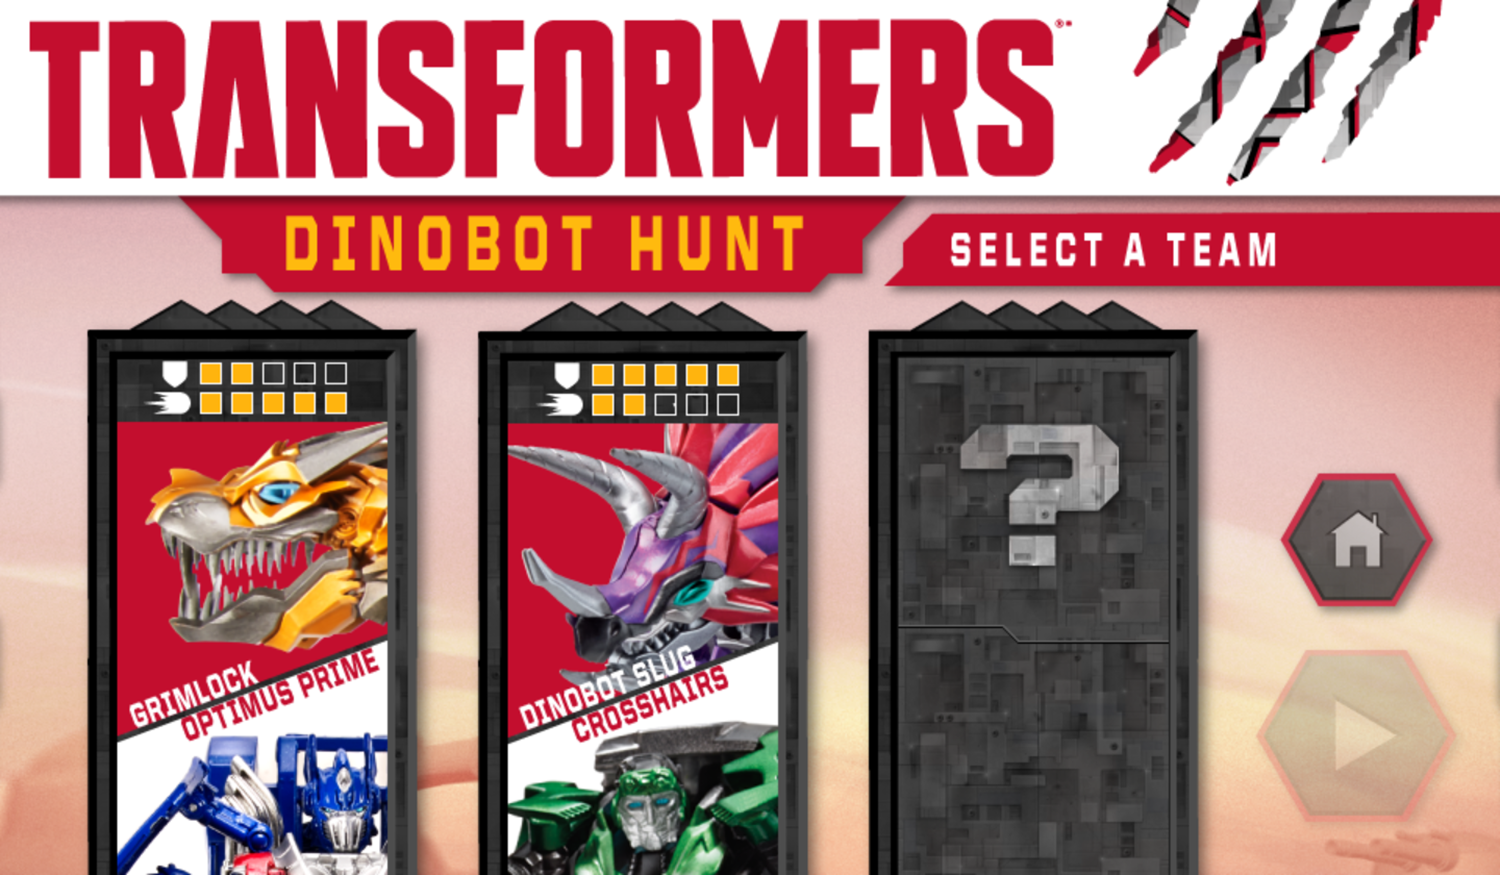 Transformers Dinobot Hunt Game Select Team Screenshot.